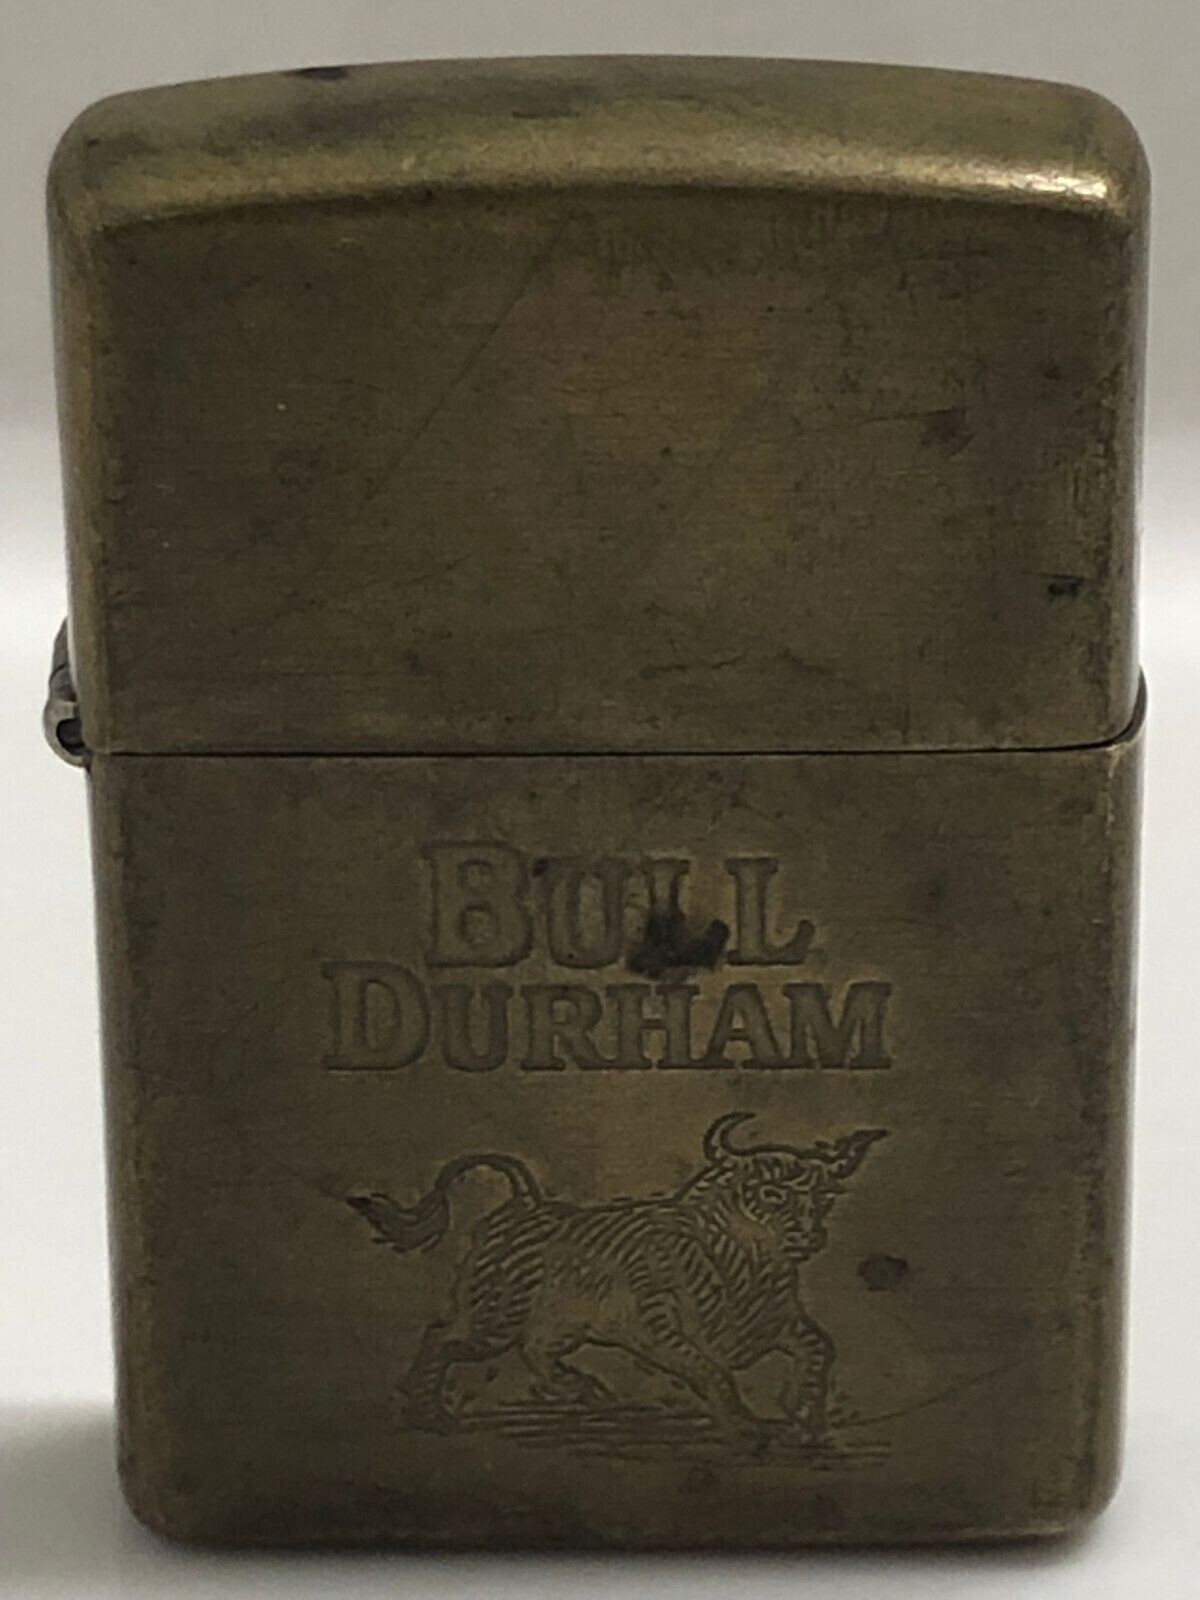 Vintage Bull Durham Tobacco Commemorative Brass Zippo Lighter 1932 - 1991